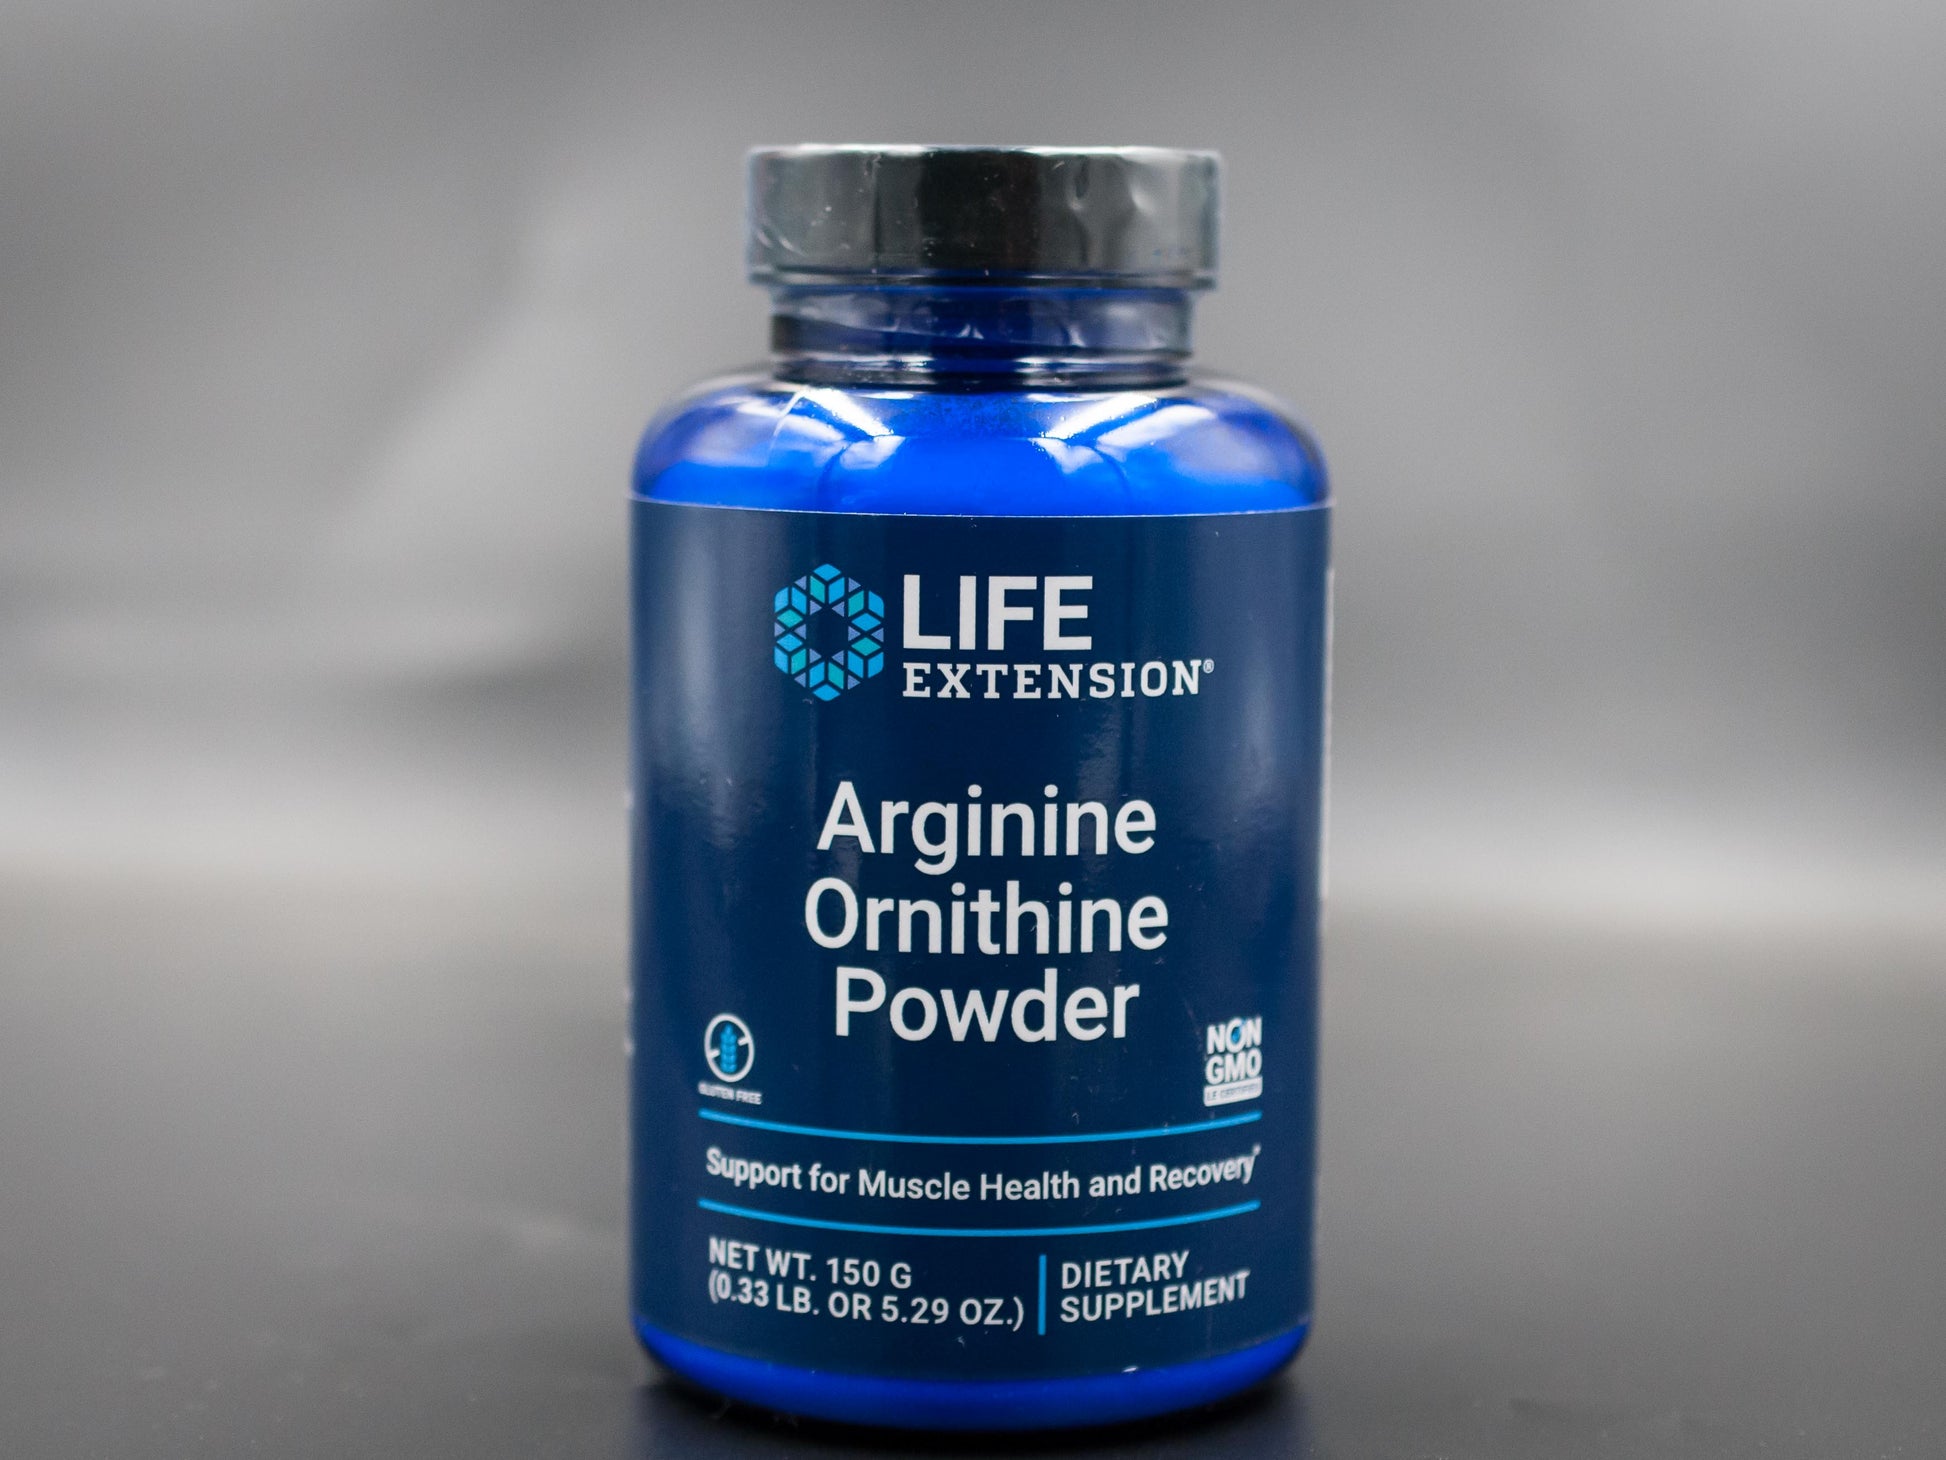 Arginine Ornithine Powder 150g  Life Extension  supplemental facts youutekk